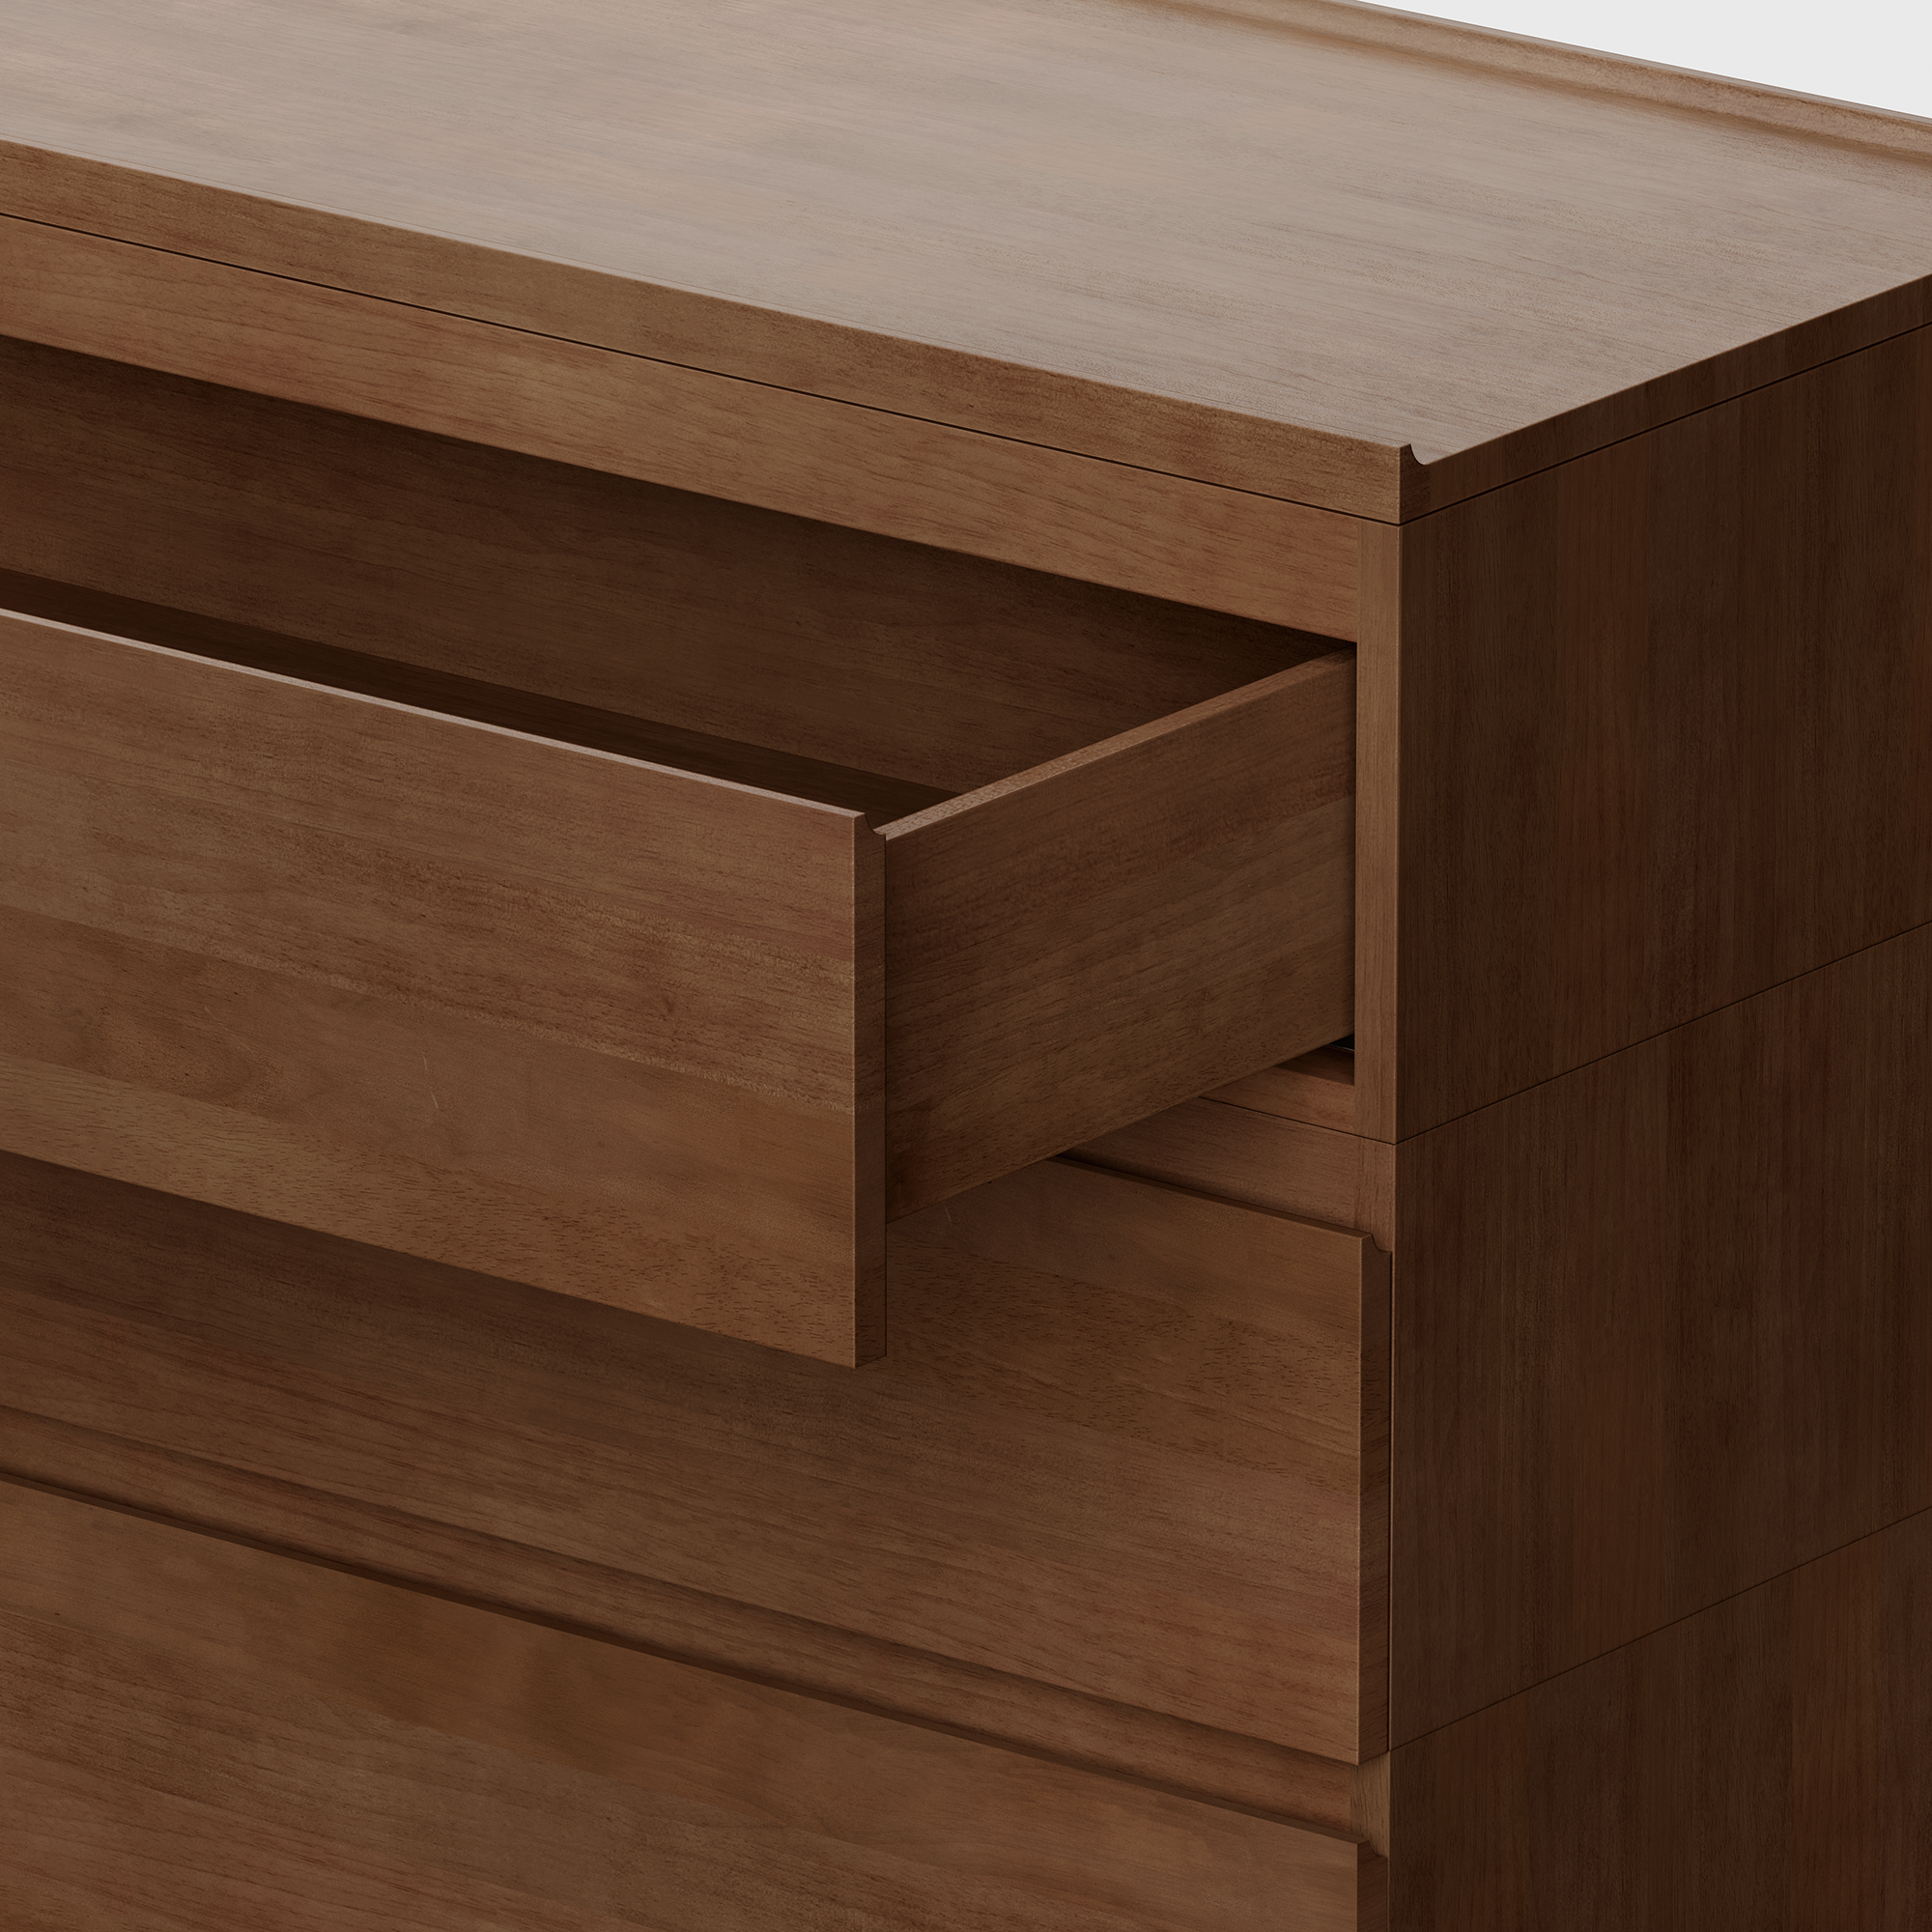 PDP Image: The Dresser (2x1 - Walnut) - Render - Drawer, Detail, Open